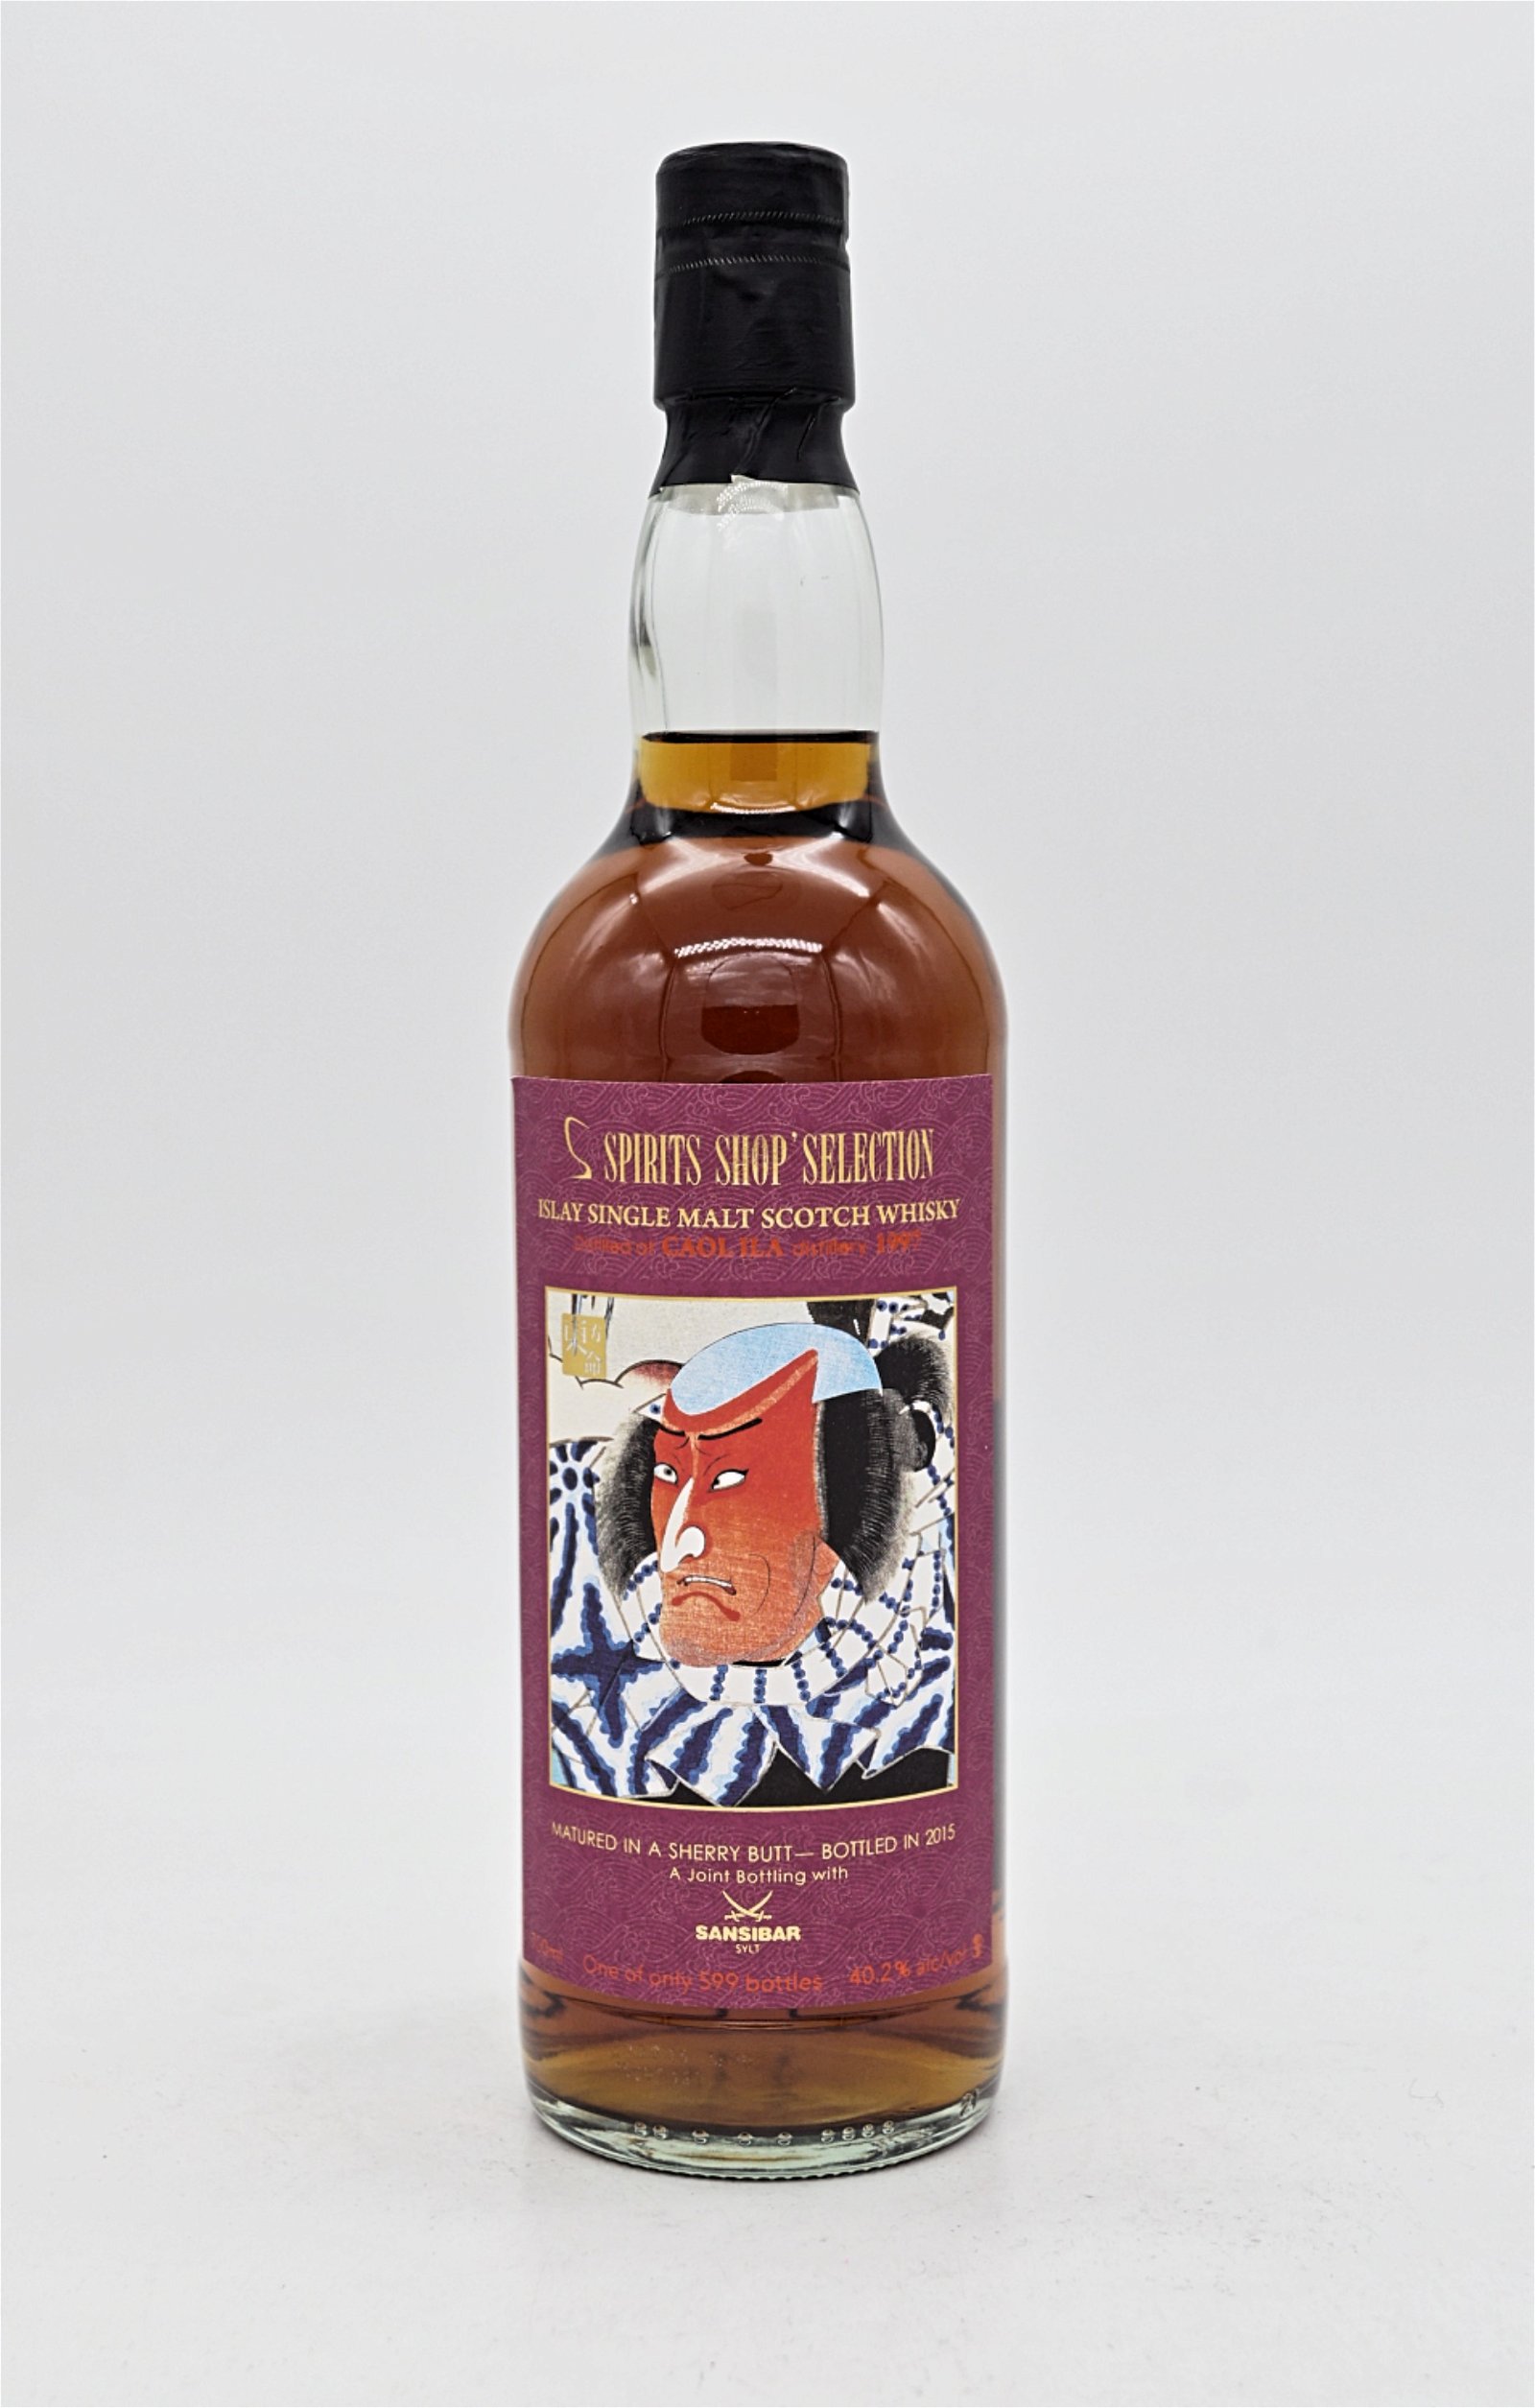 S-Spirits Shop Selection 18 Jahre Caol Ila Distillery 1997/2015 Sherry Butt Islay Single Malt Scotch Whisky